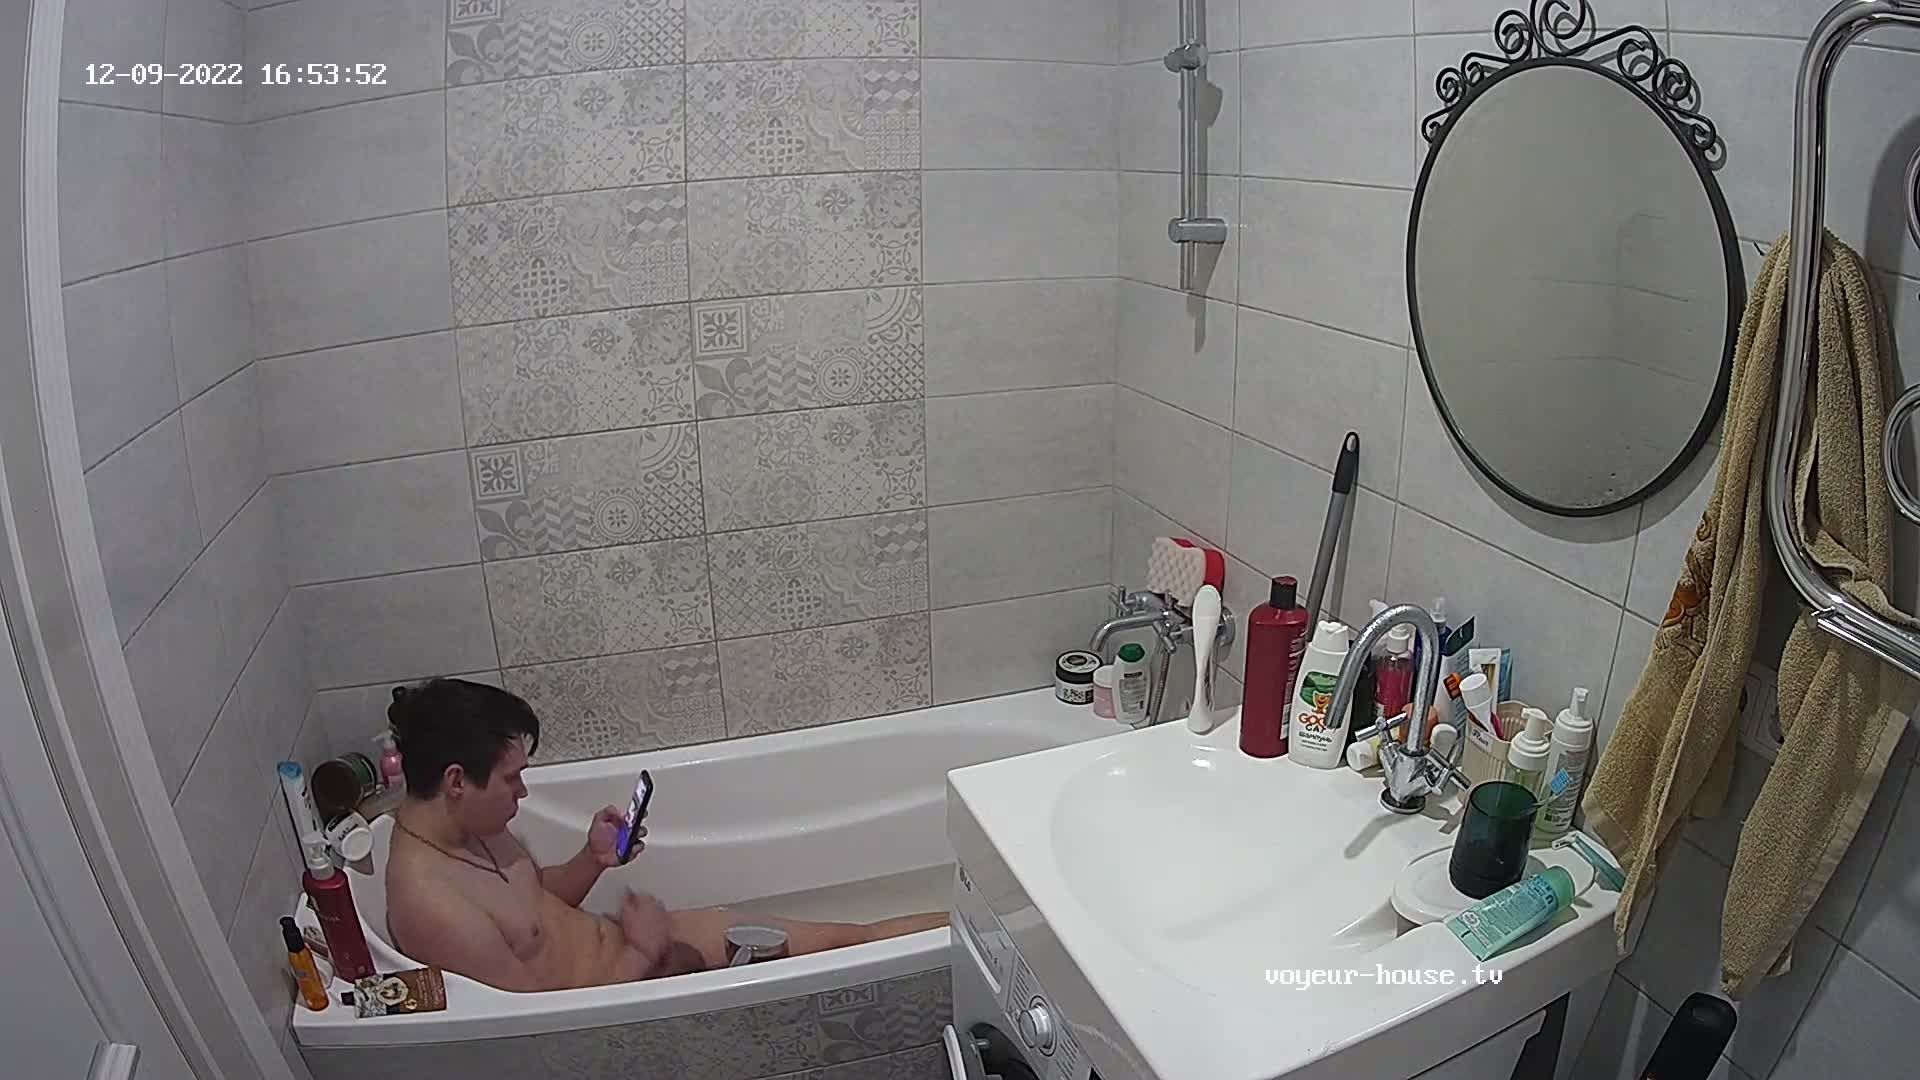 Nolan jerking off in the bath 9 Dec 2022